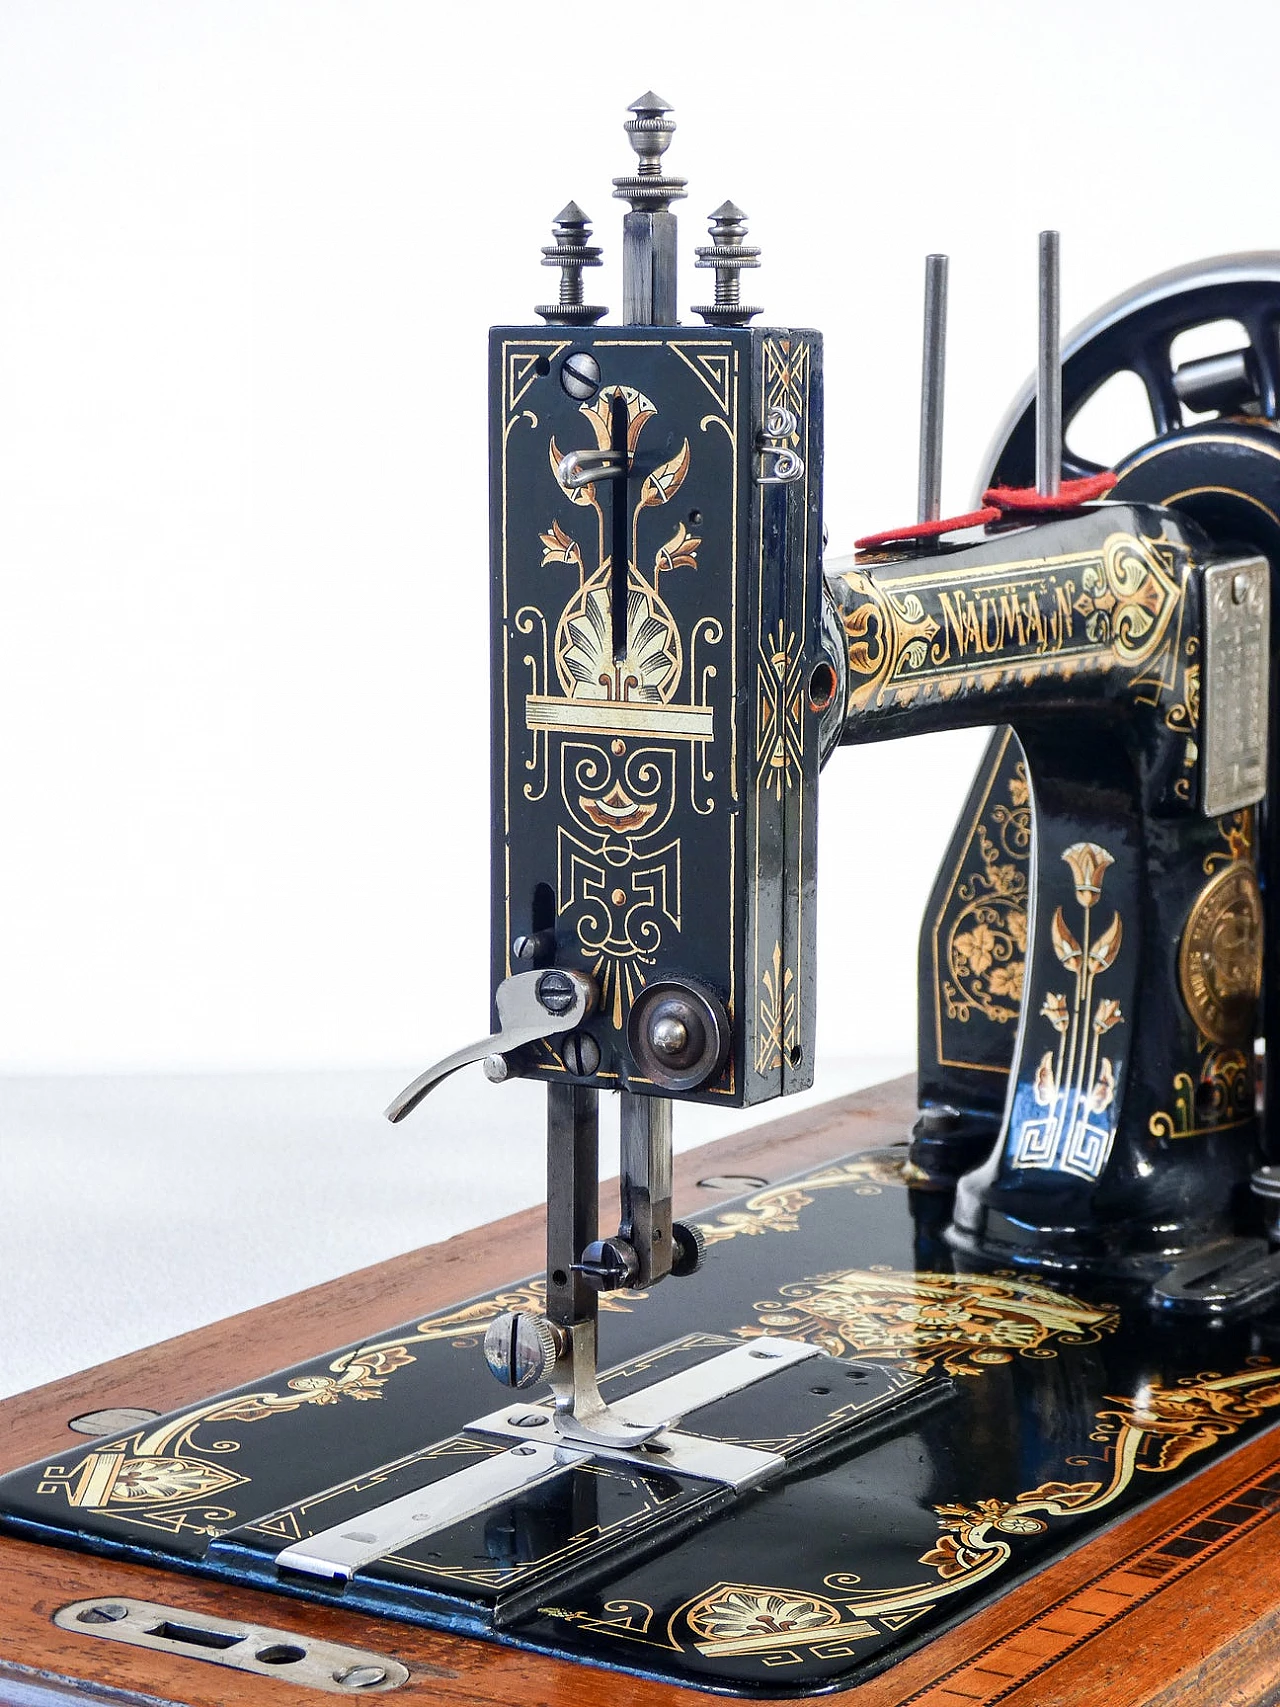 Naumann portable sewing machine, early 20th century 9